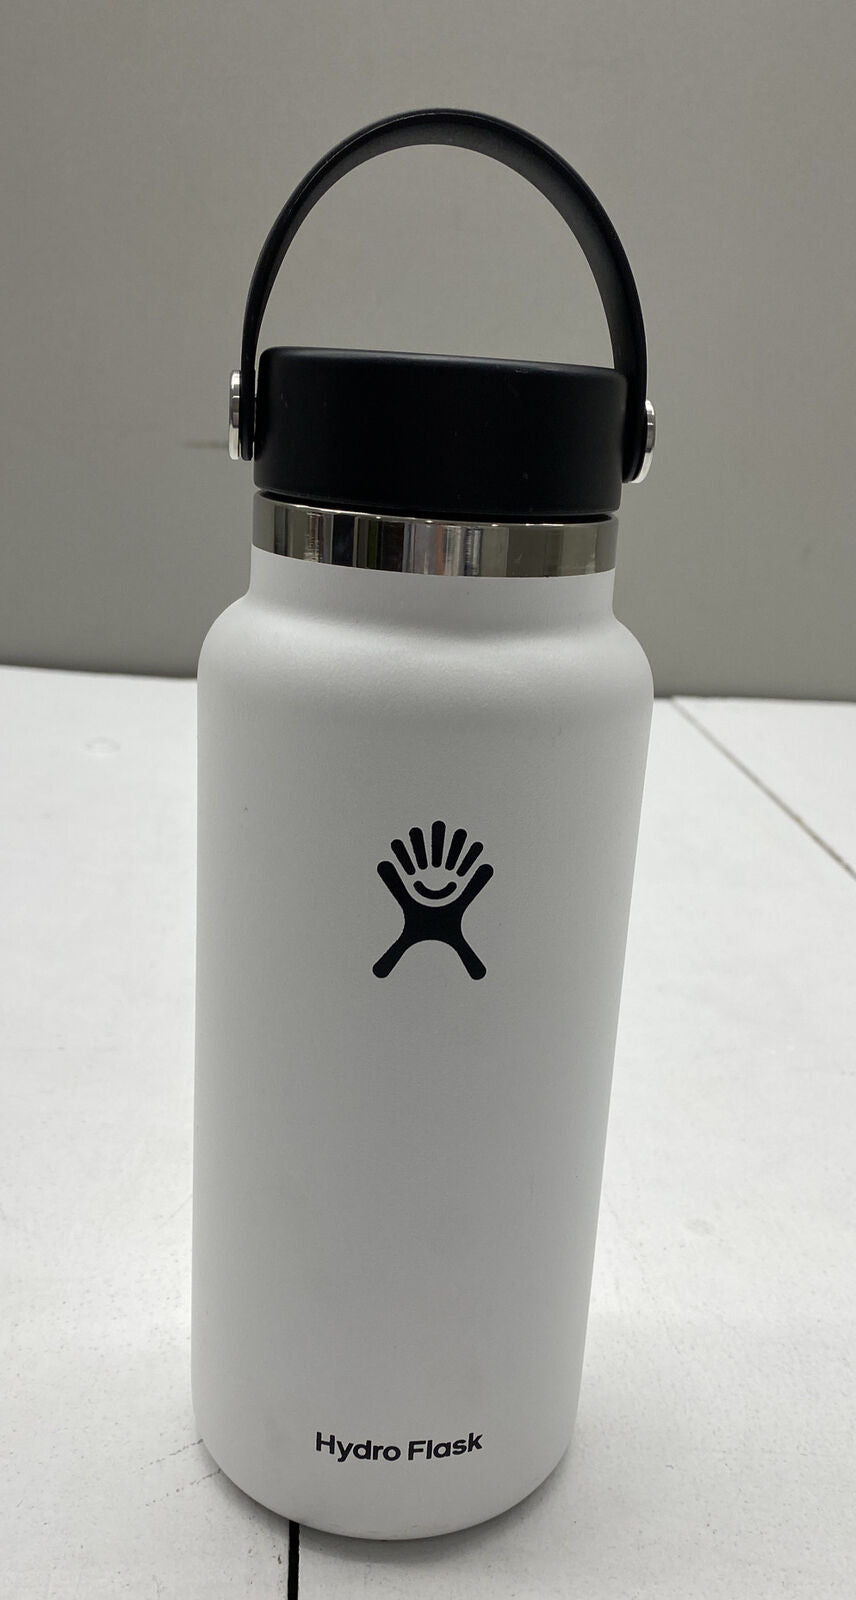  Hydro Flask 32 oz. Water Bottle - Stainless Steel